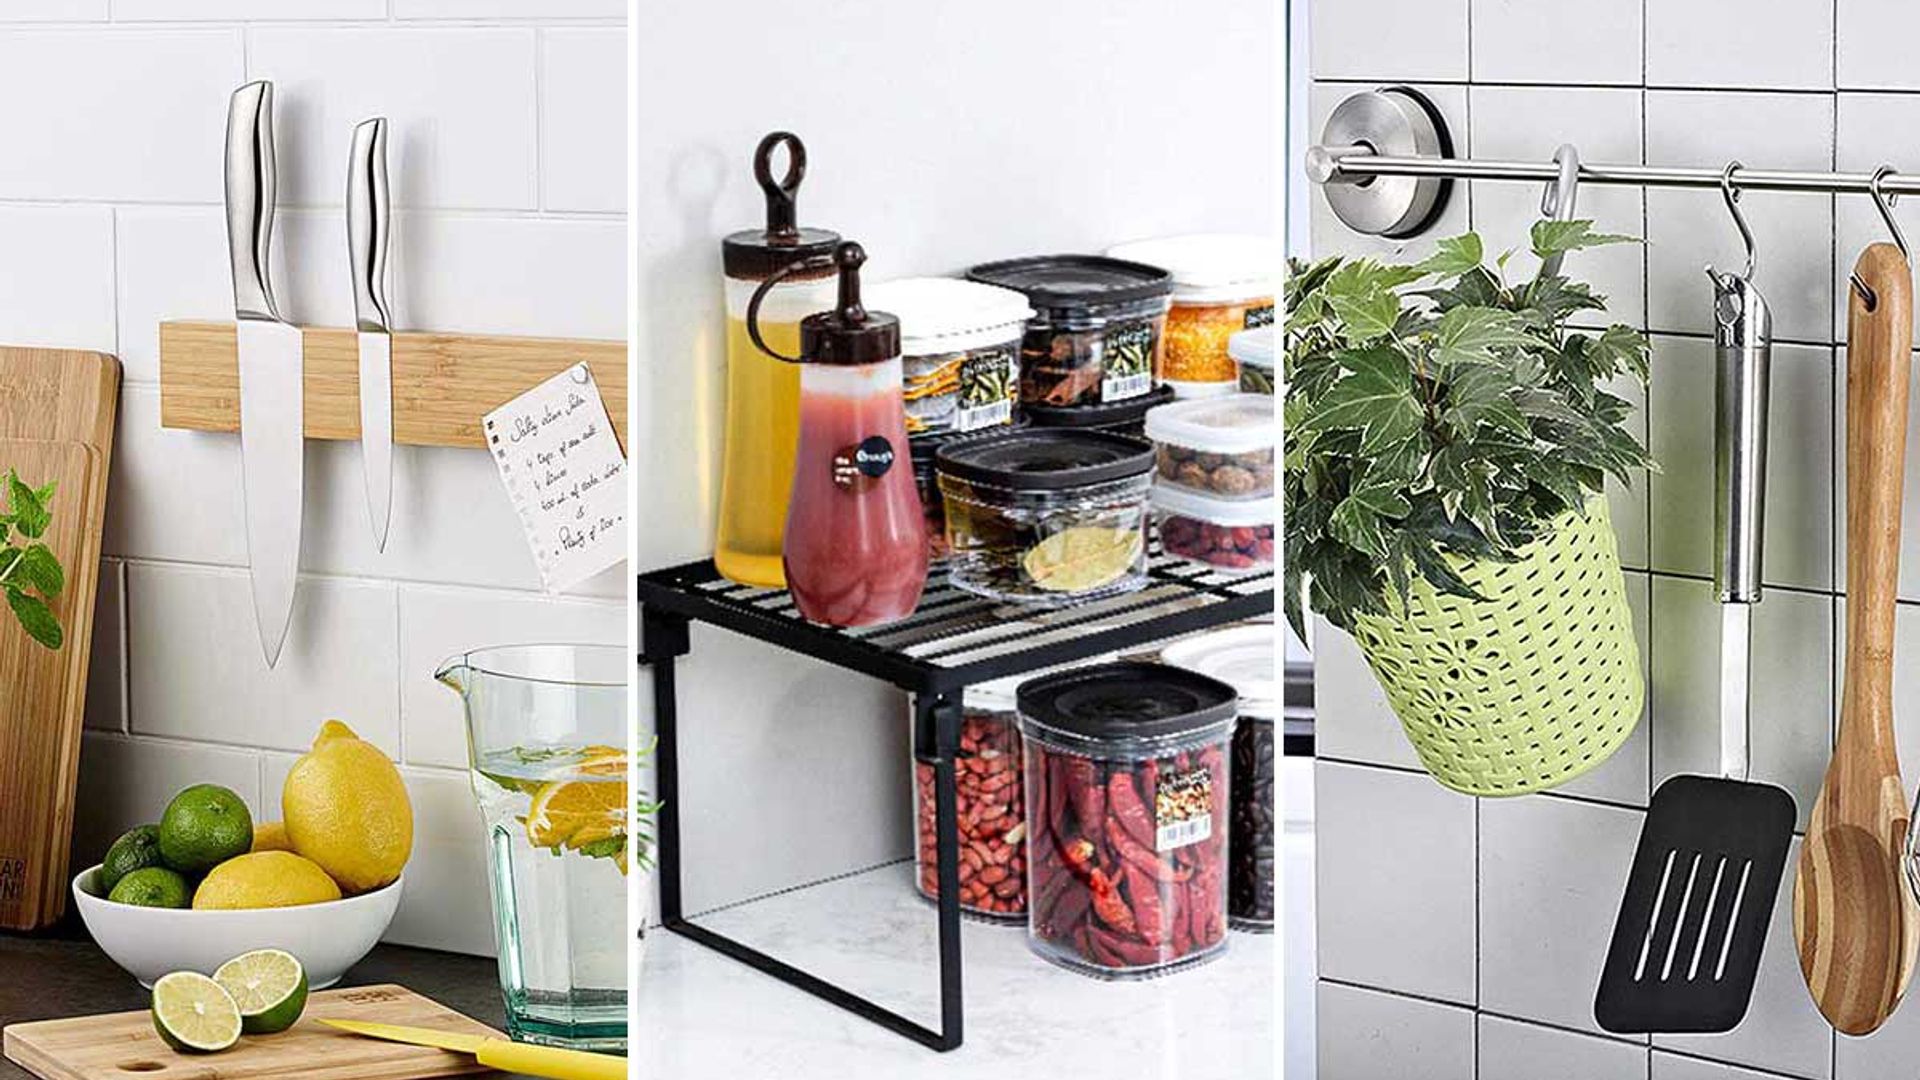 10 Genius Kitchen Storage And Organisation Ideas That Will Make Life Easier Hello